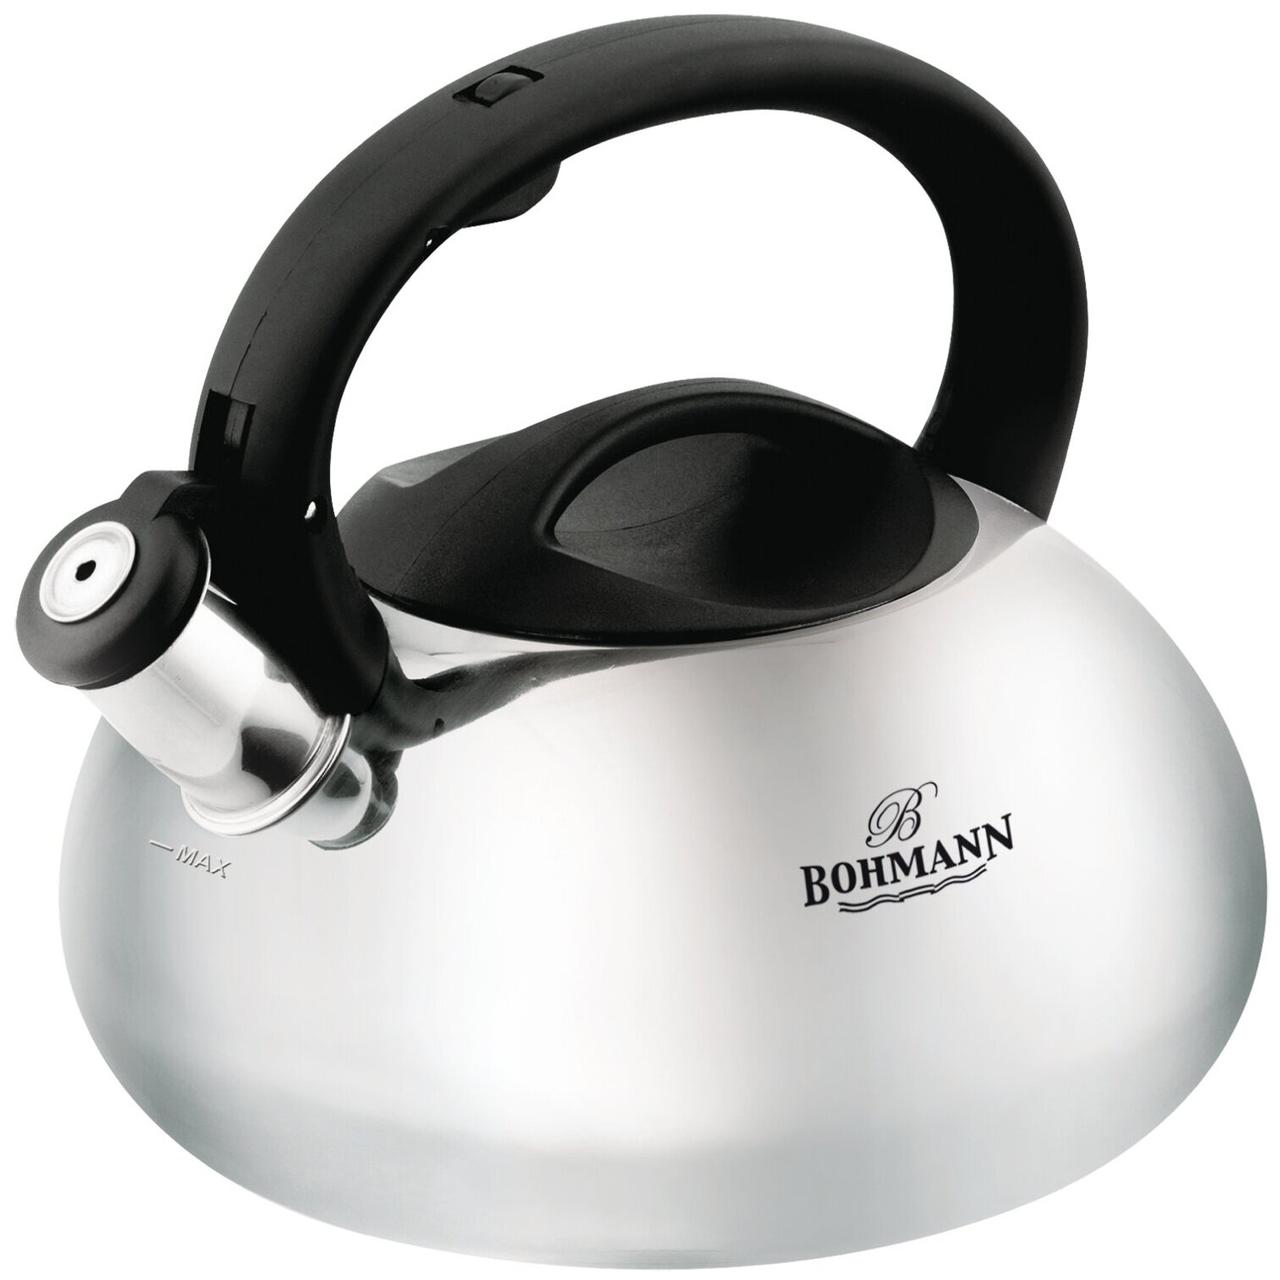 Чайник металлический BOHMANN BH - 9975, объем 3,5л.